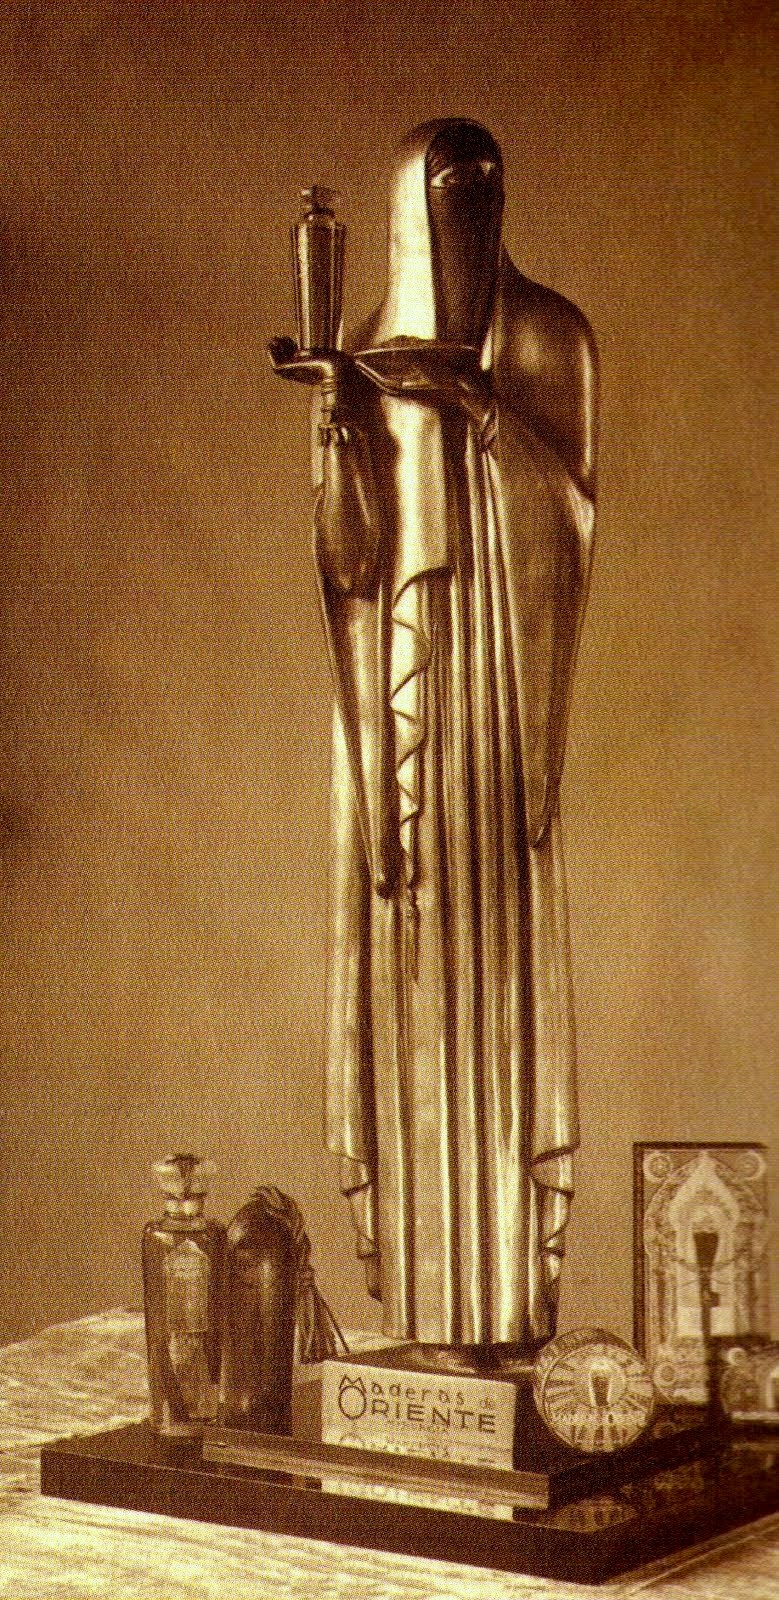 Cleopatra's Boudoir: Maderas de Oriente by Myrurgia c1918